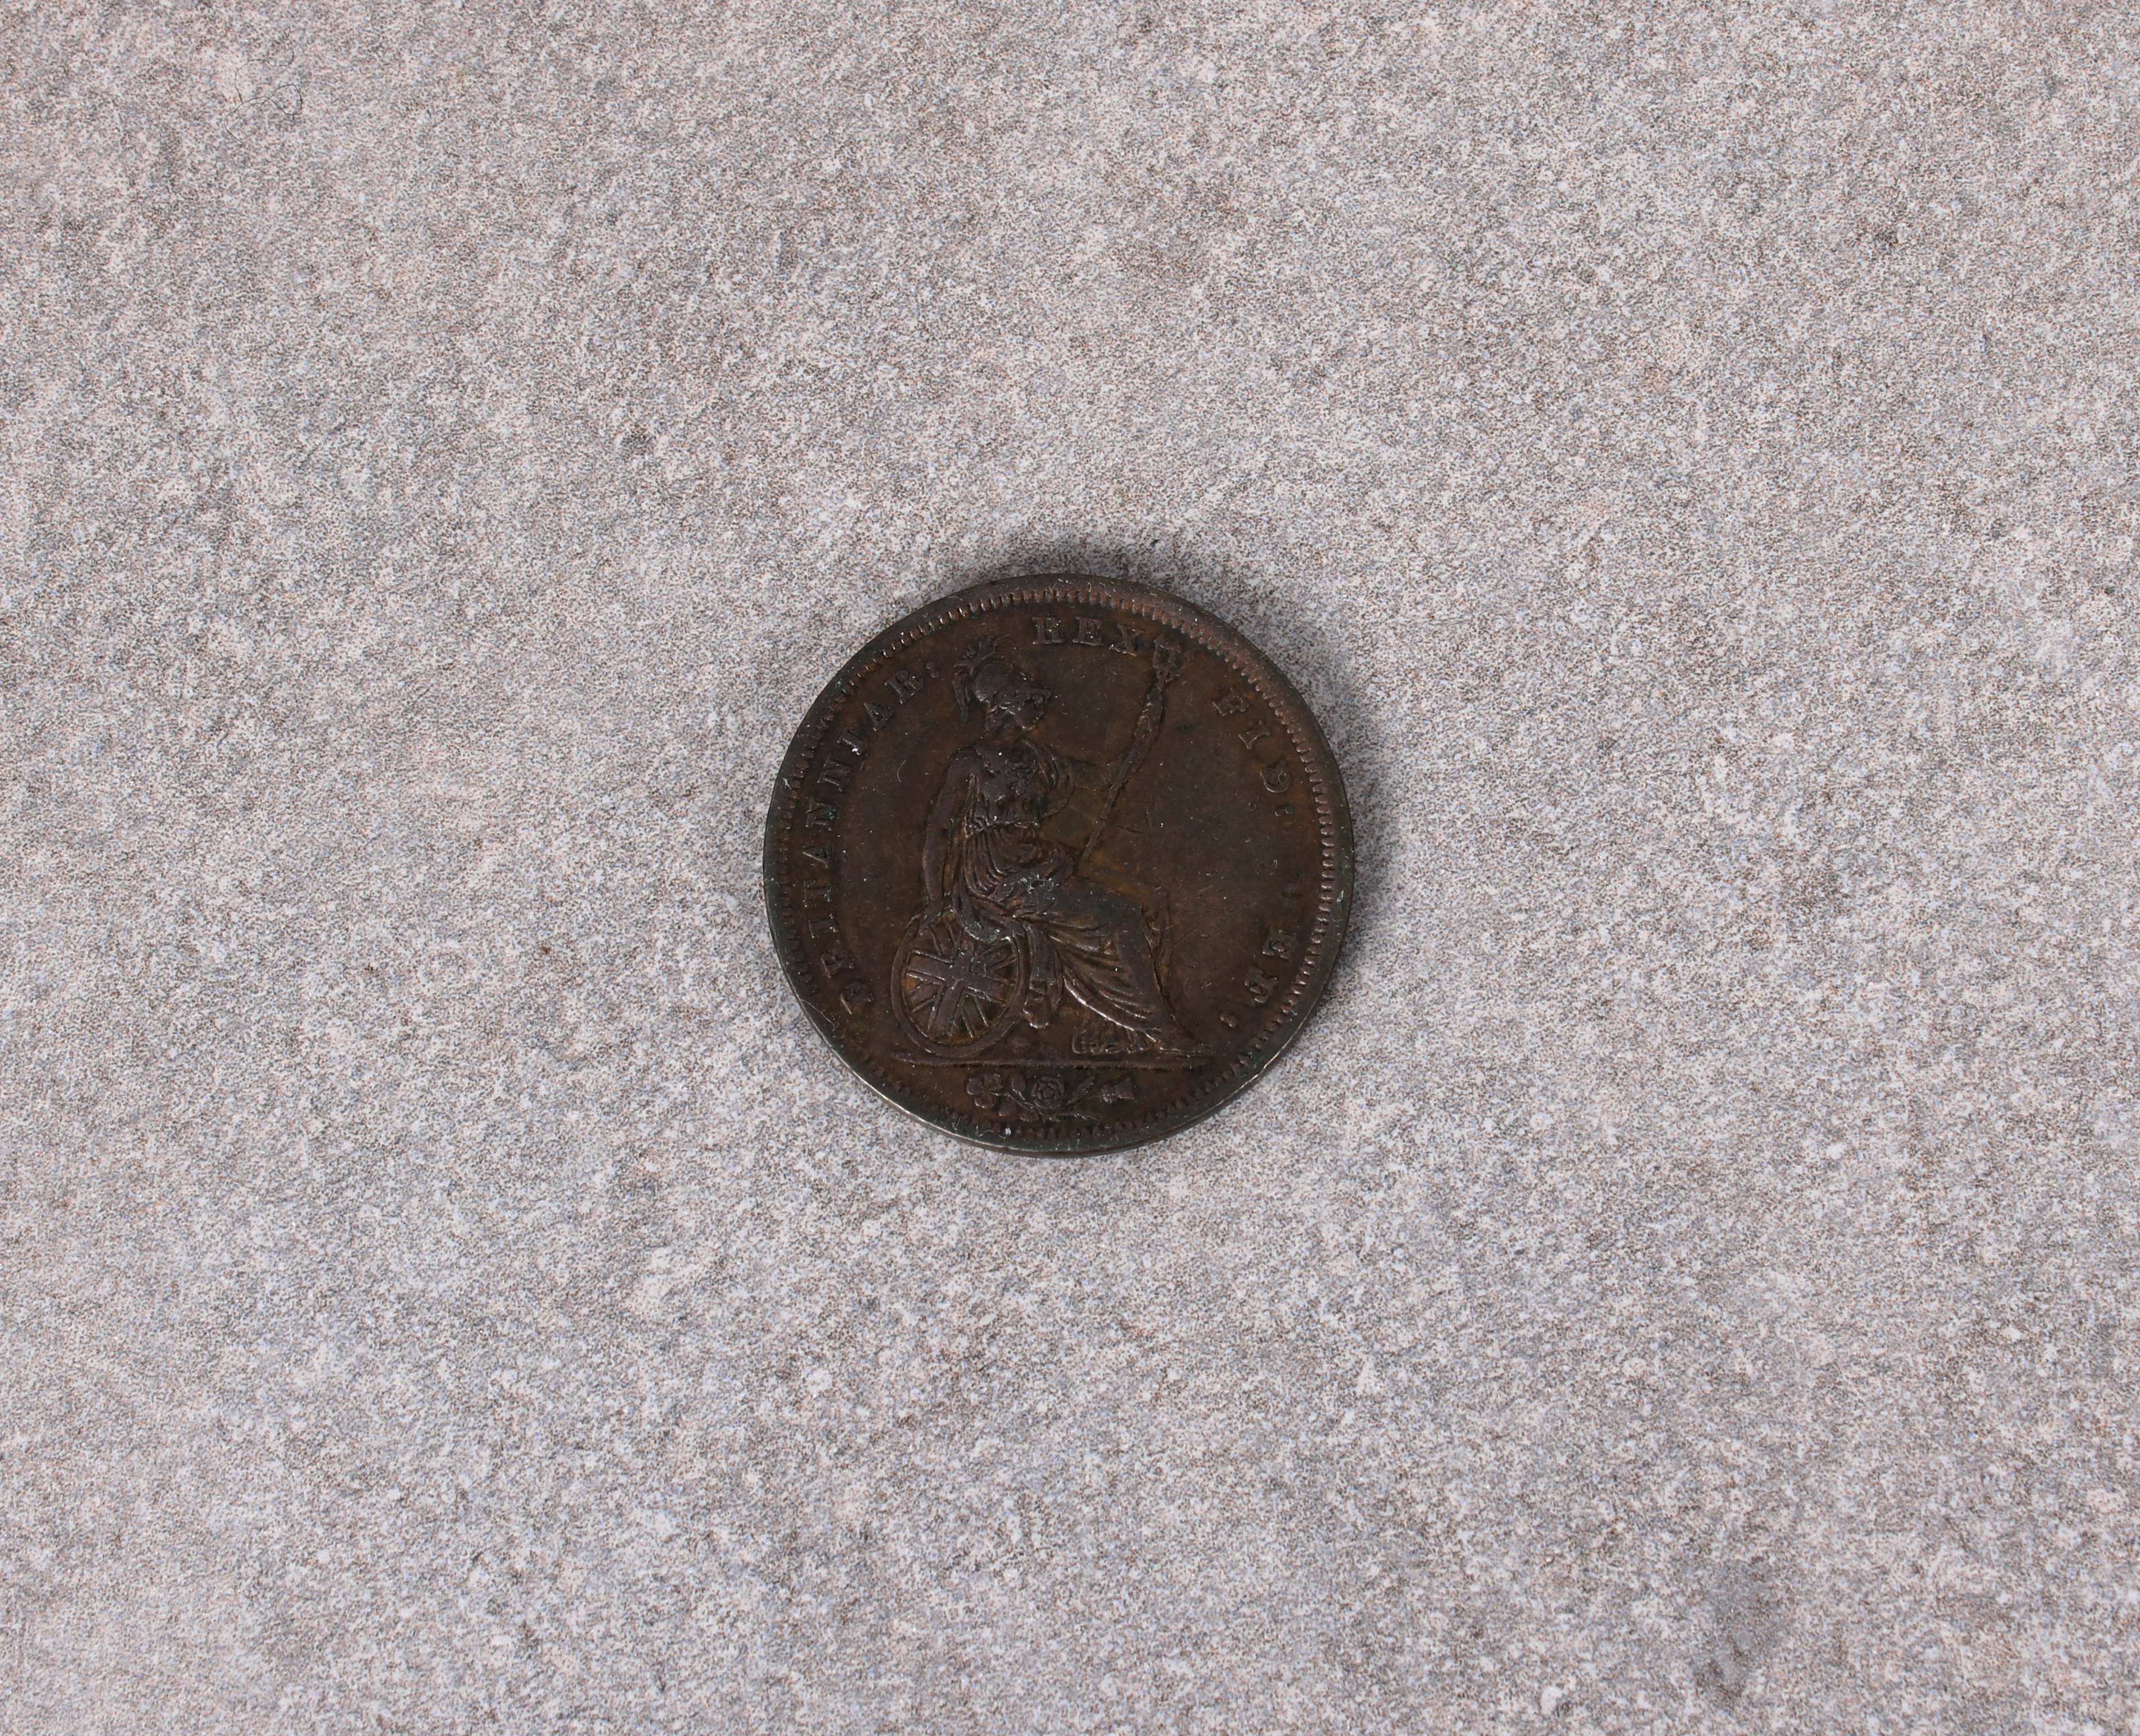 An 1826 George IV Penny